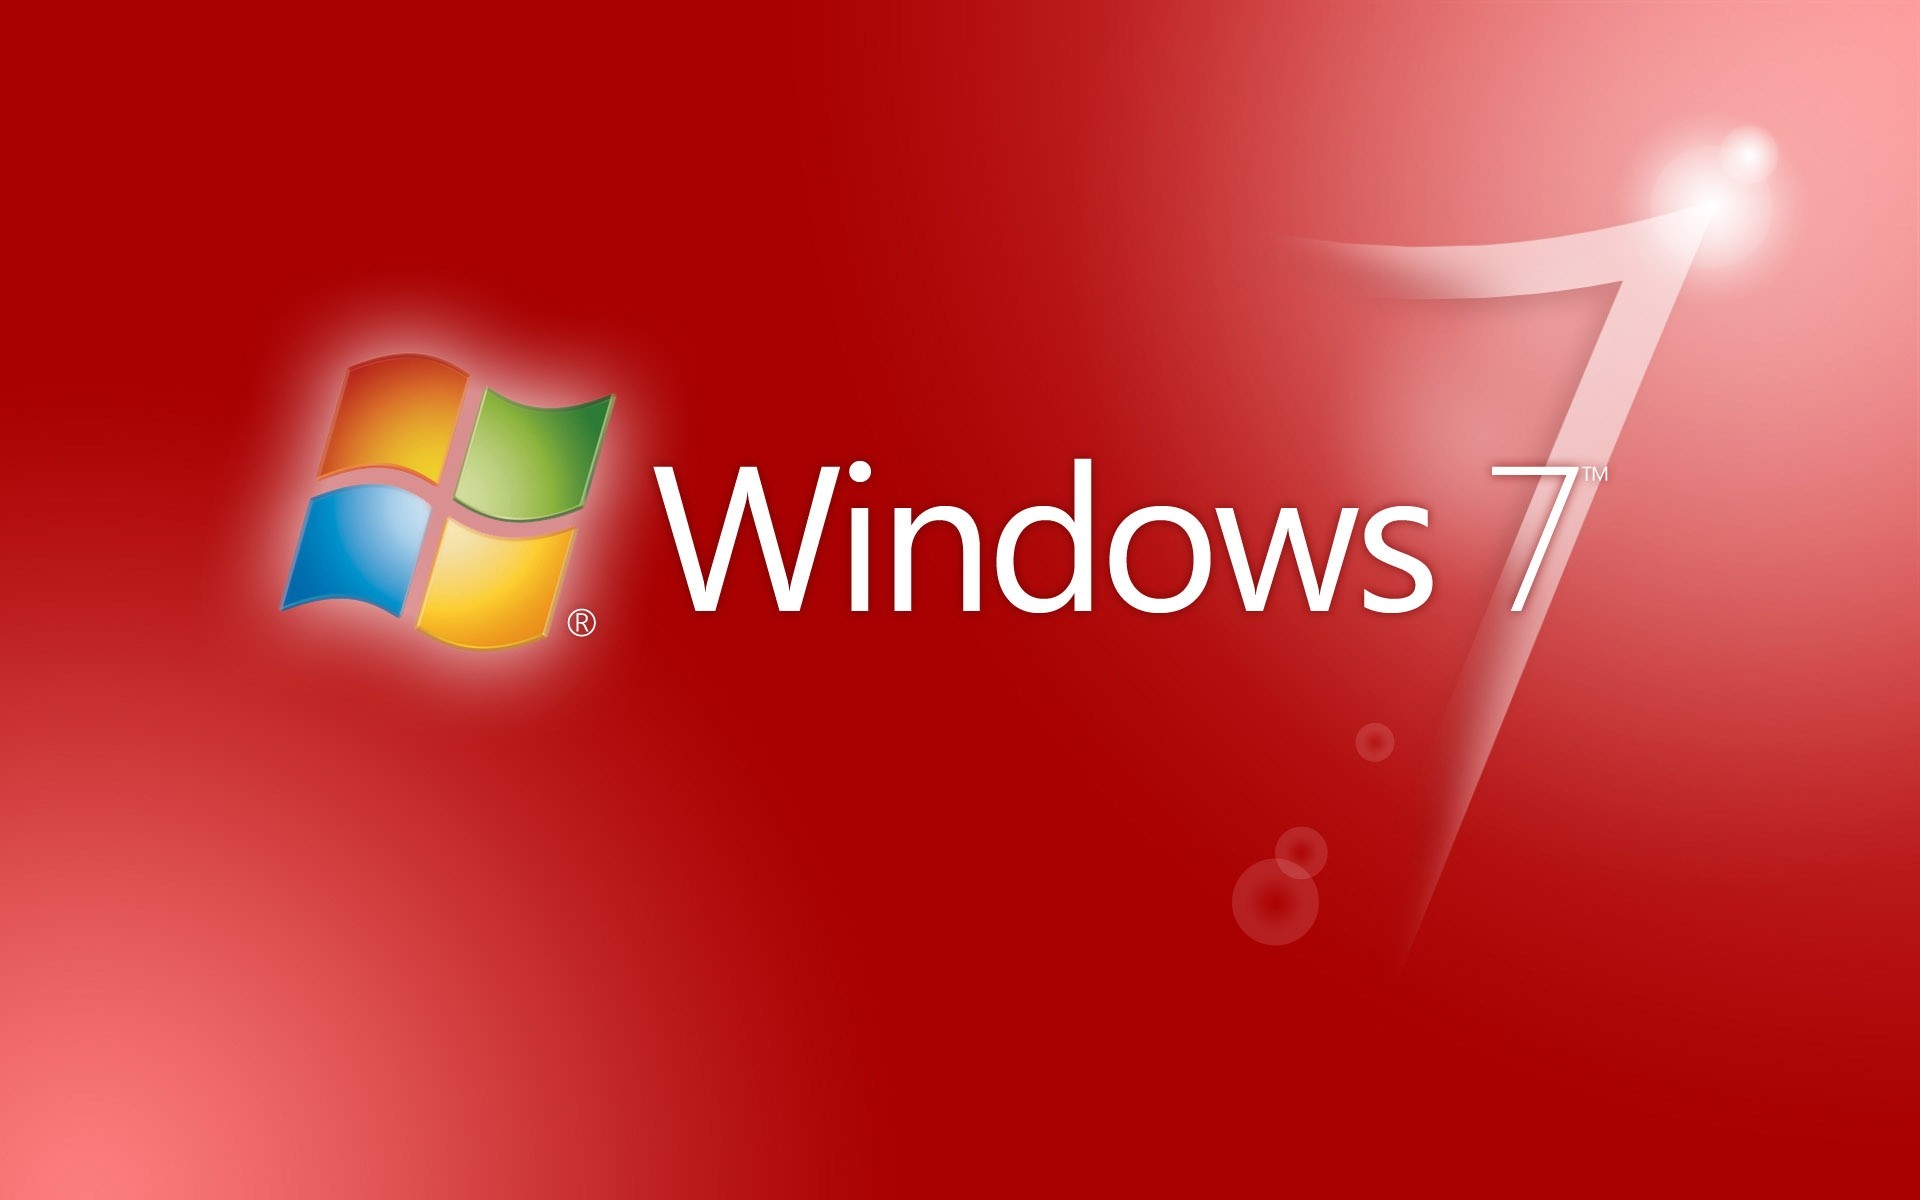 Windows семерка. Виндовс 7. Логотип Windows. Логотип Windows 7. Обои Windows 7.